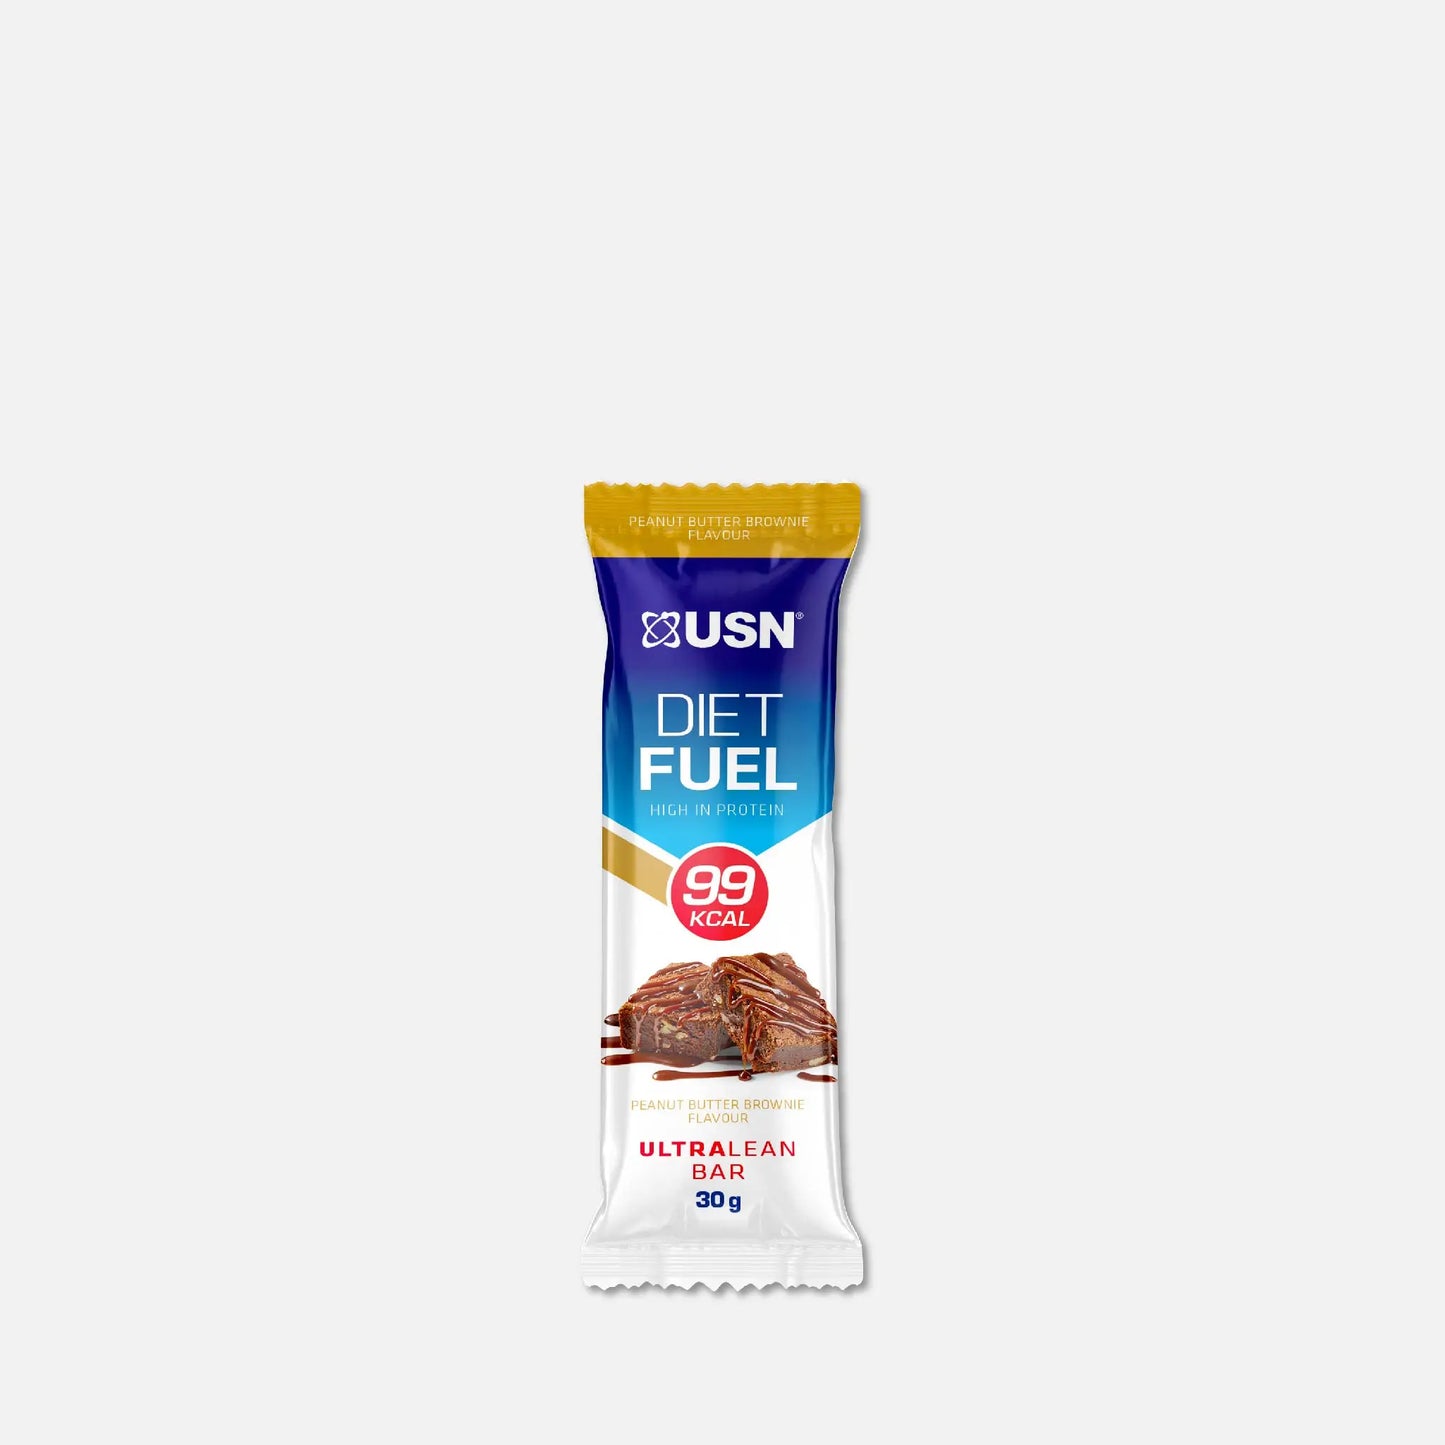 USN-Diet-Fuel-99kcal-bar-peanutbutter-brownie-bar